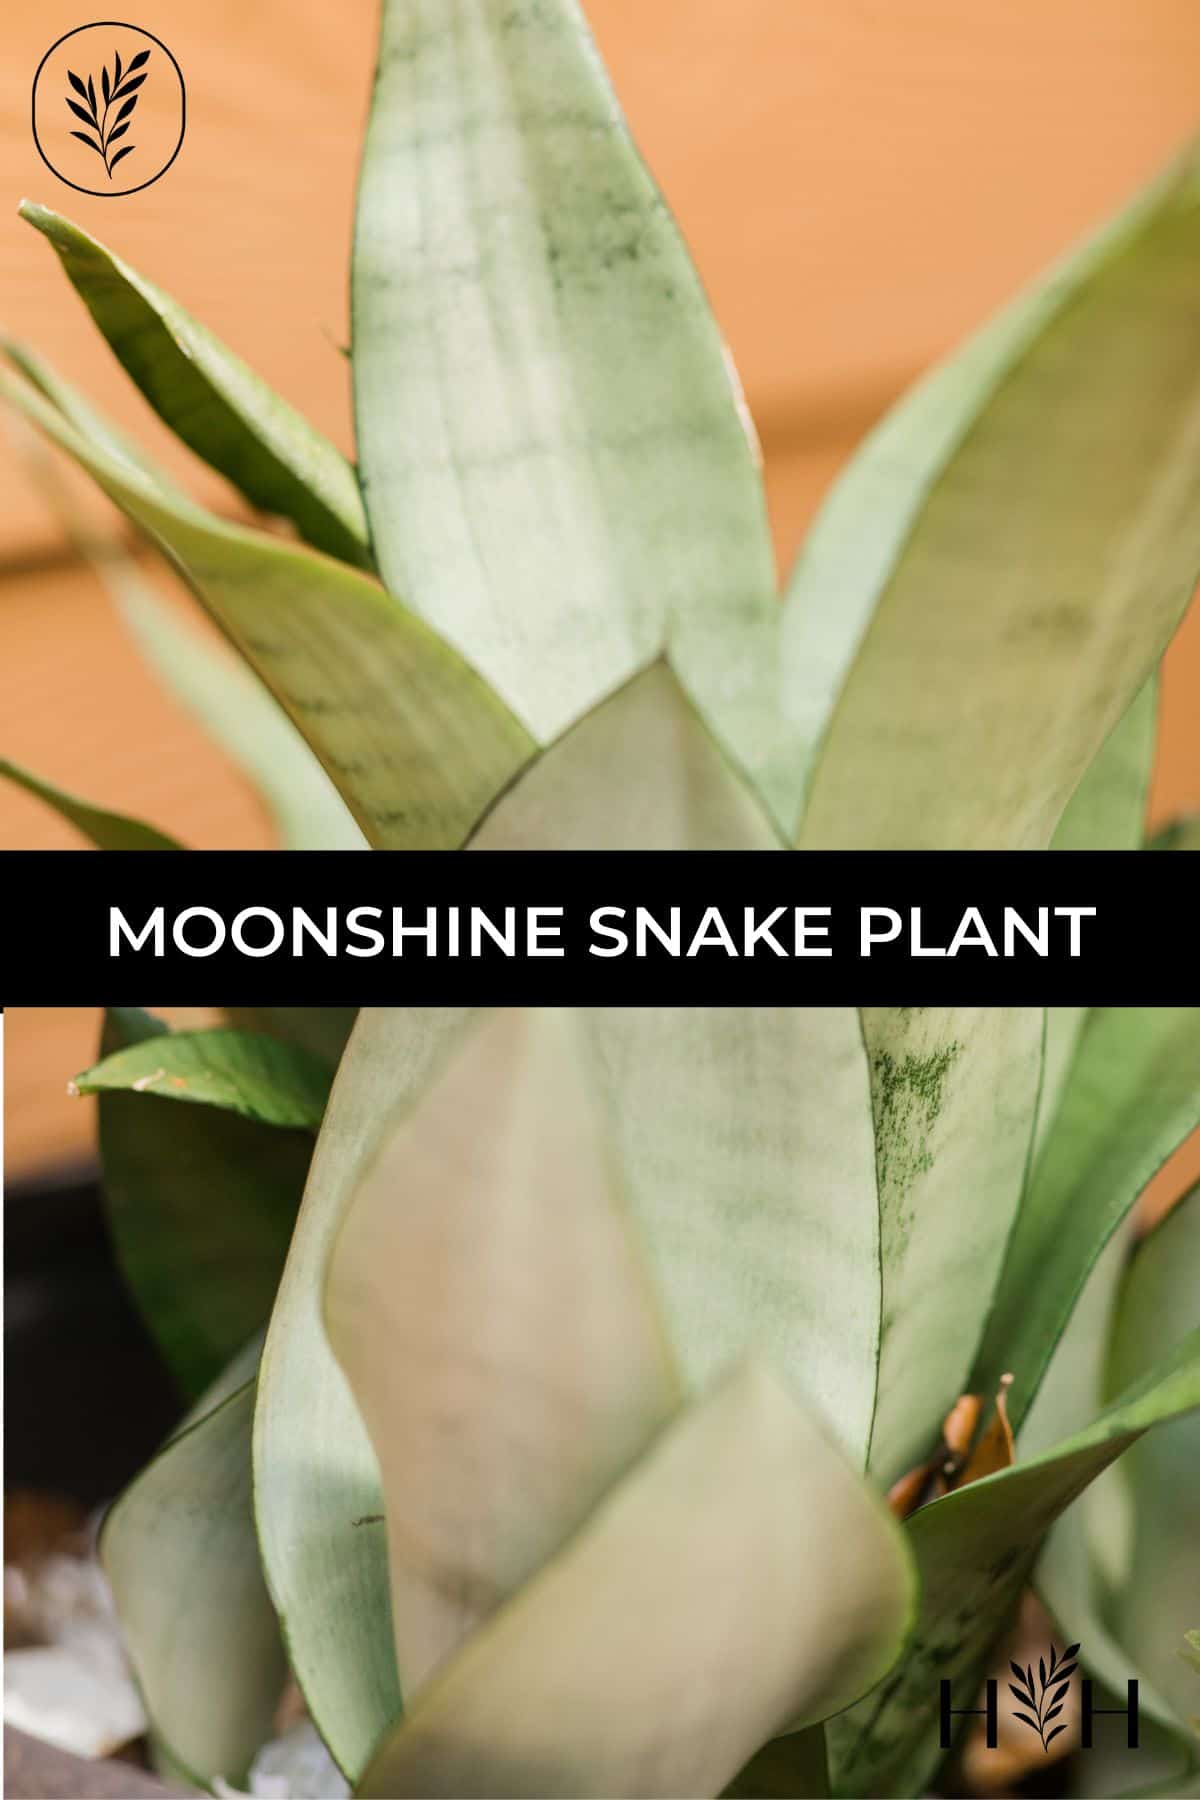 Moonshine snake plant via @home4theharvest